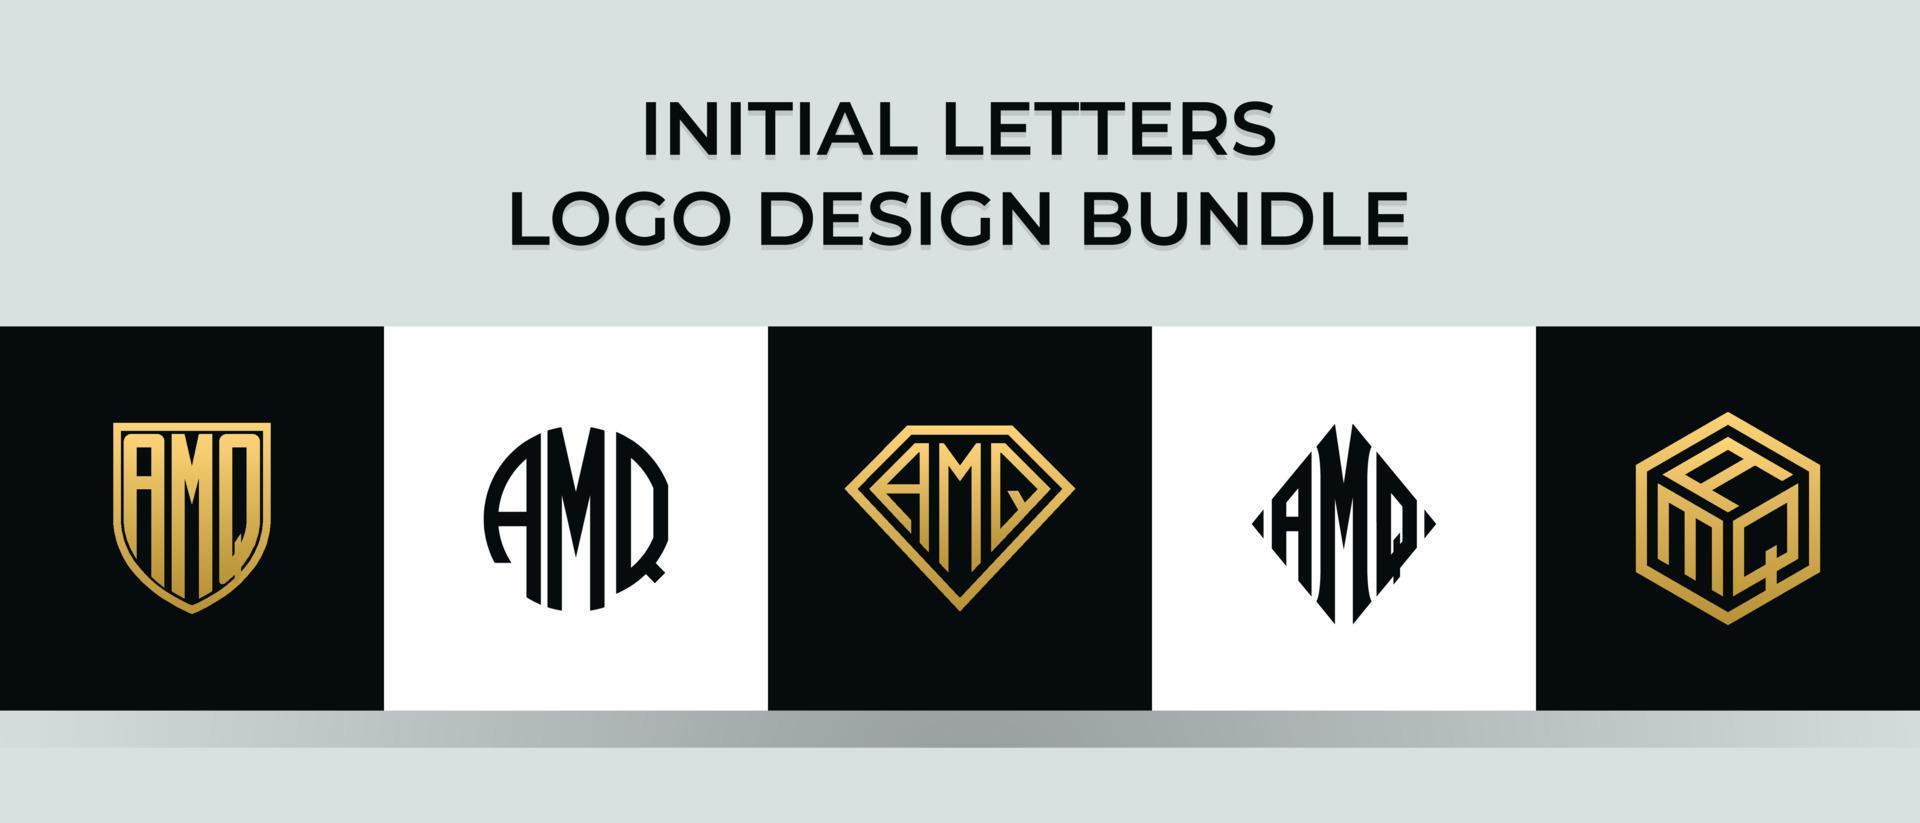 Initial letters AMQ logo designs Bundle vector